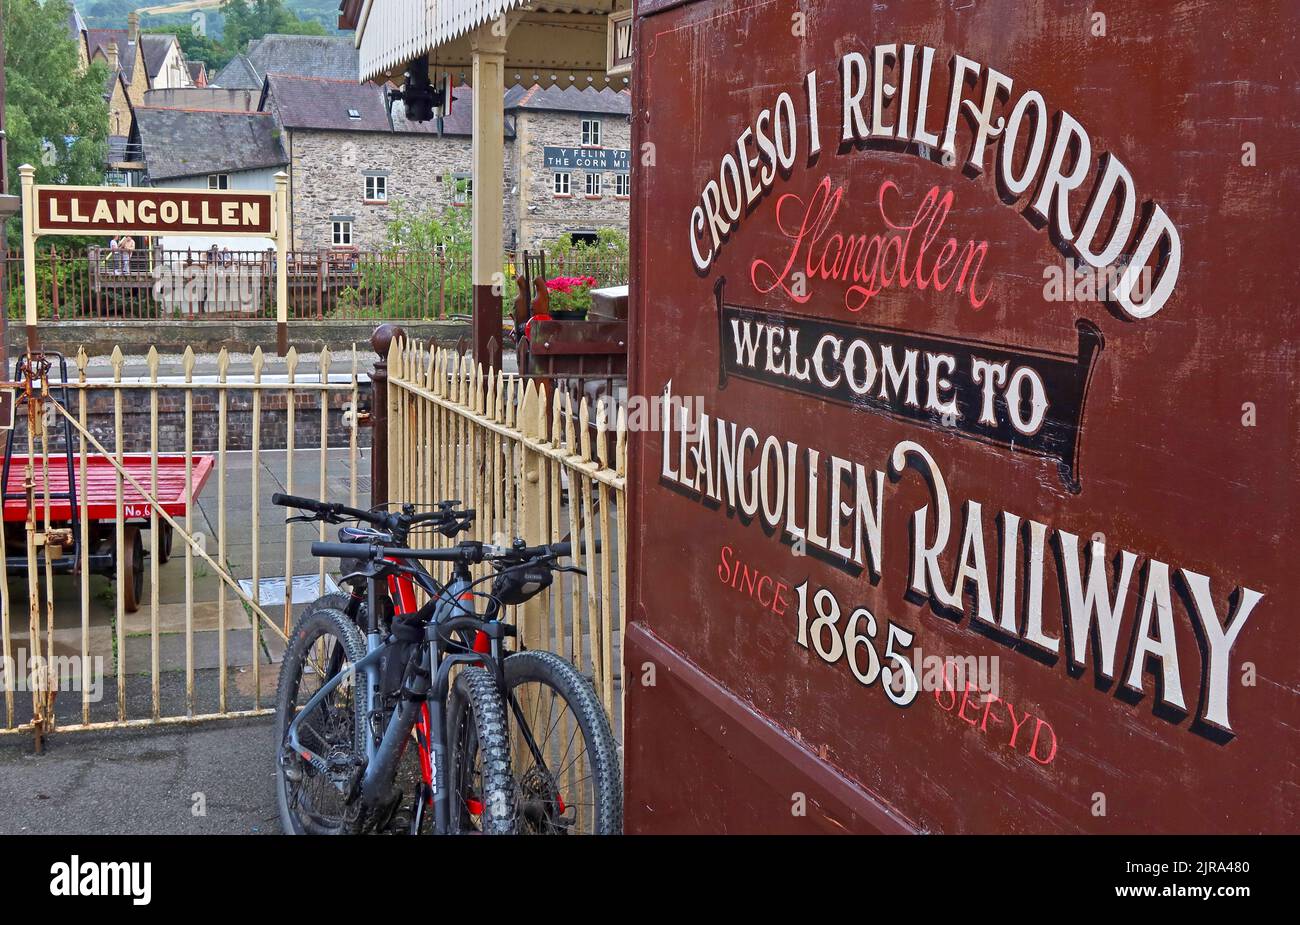 Croeso I Reilffordd Llangollen Railway, since 1865 sign, Denbighshire, North Wales, UK Stock Photo